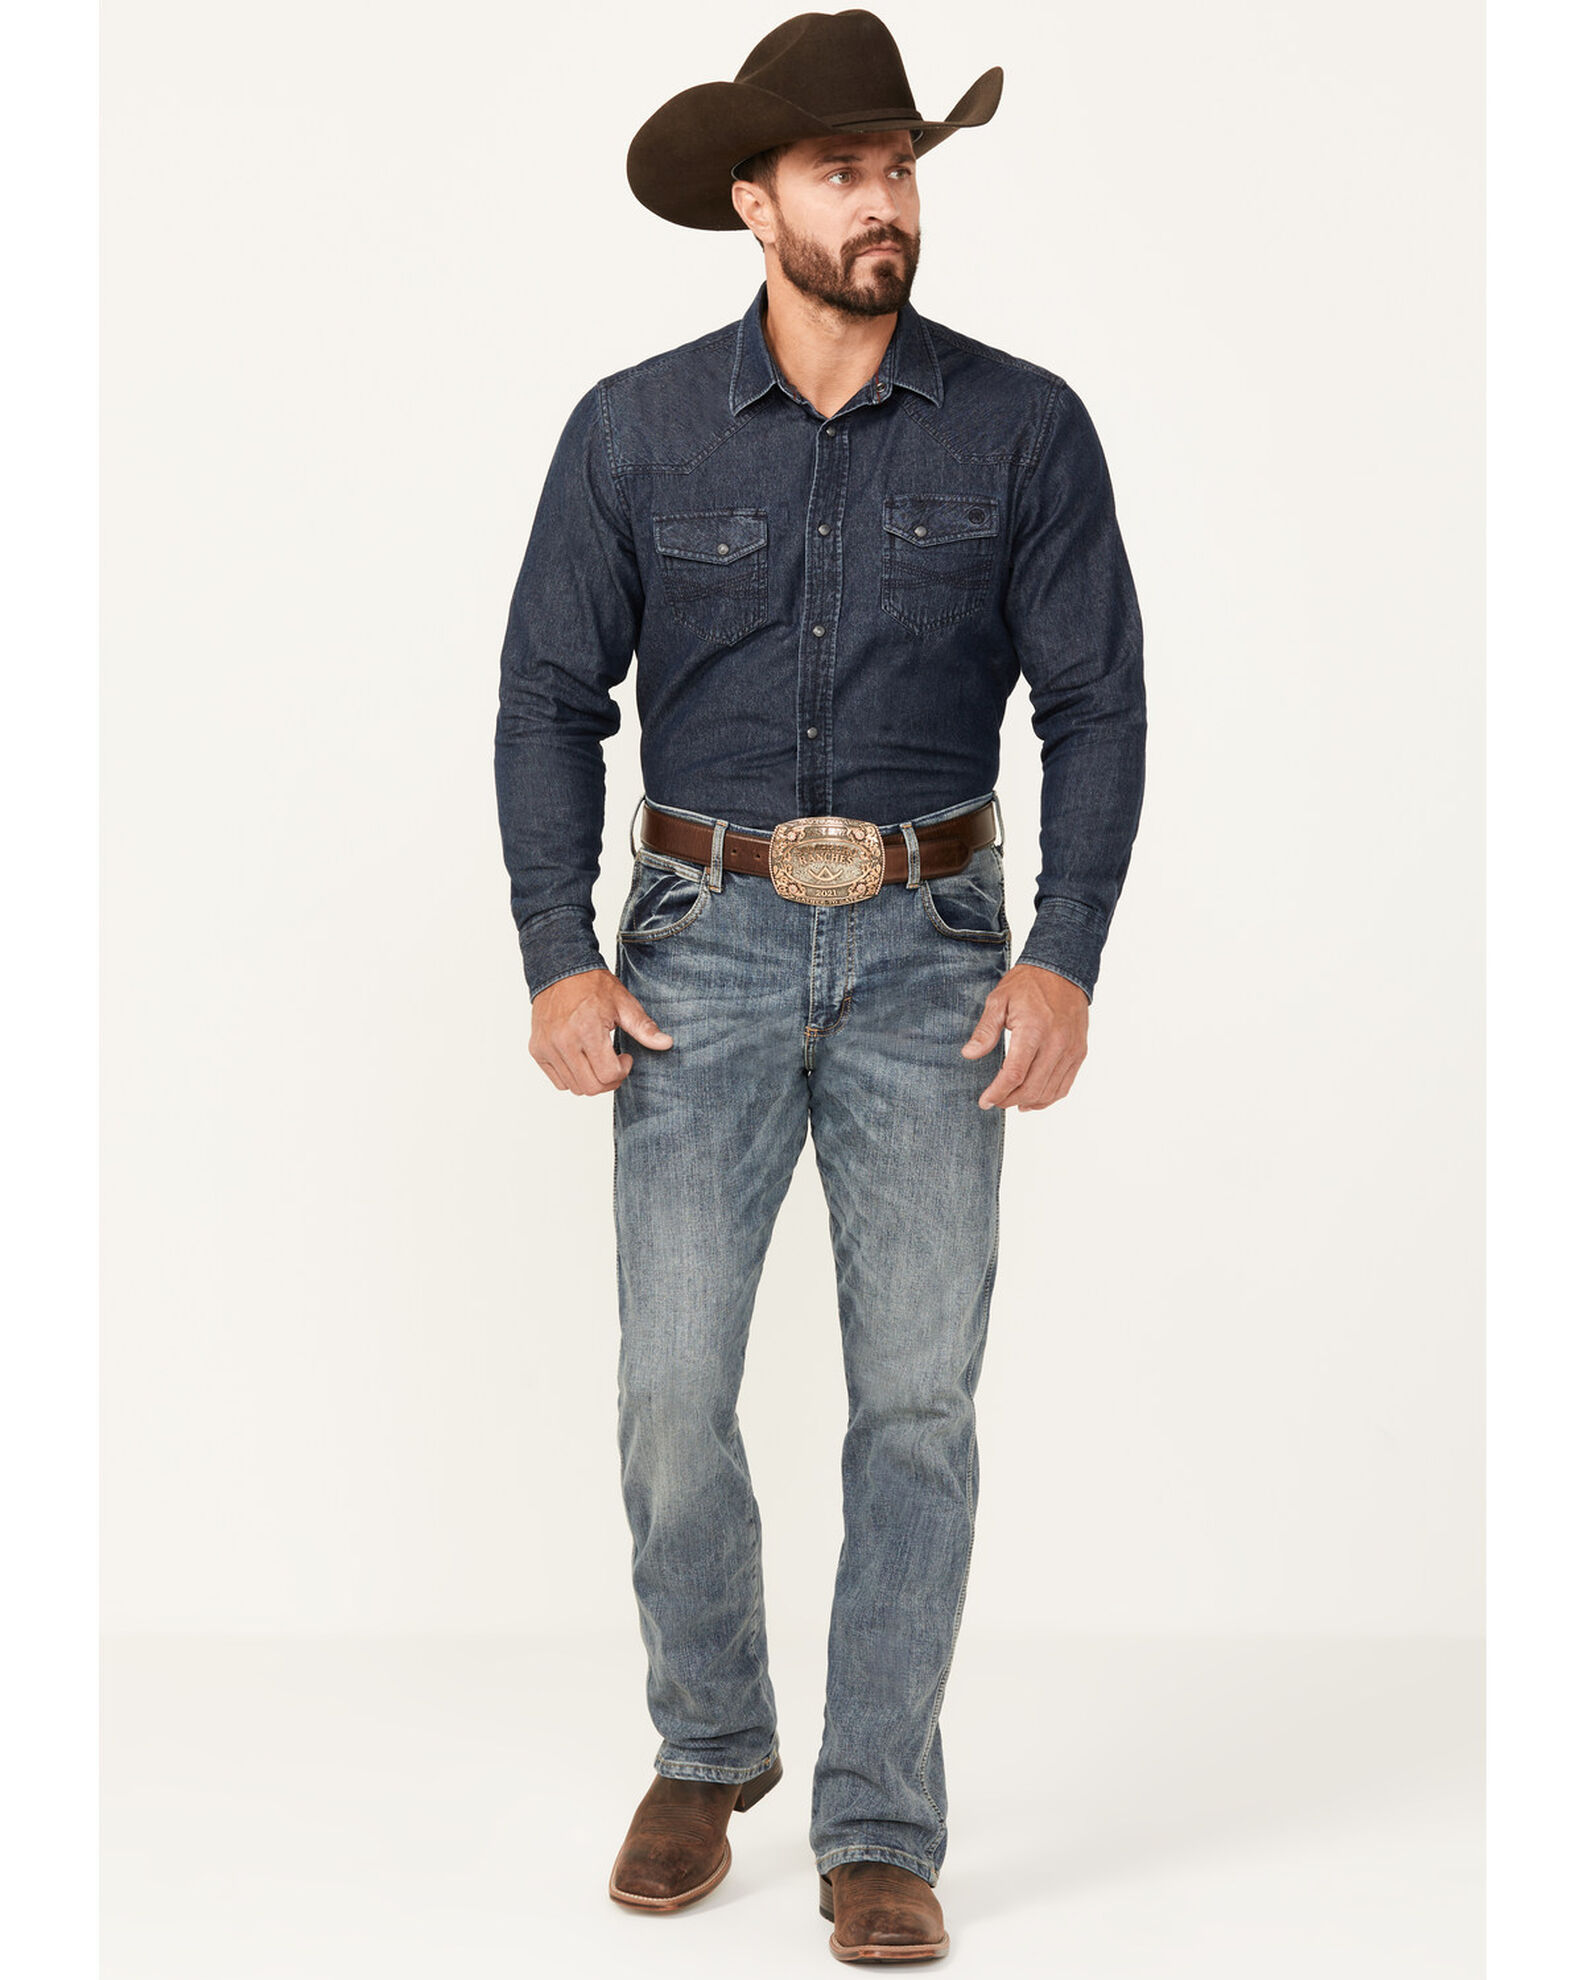 Product Name: Wrangler Retro Men's Slim Fit Bootcut Jeans